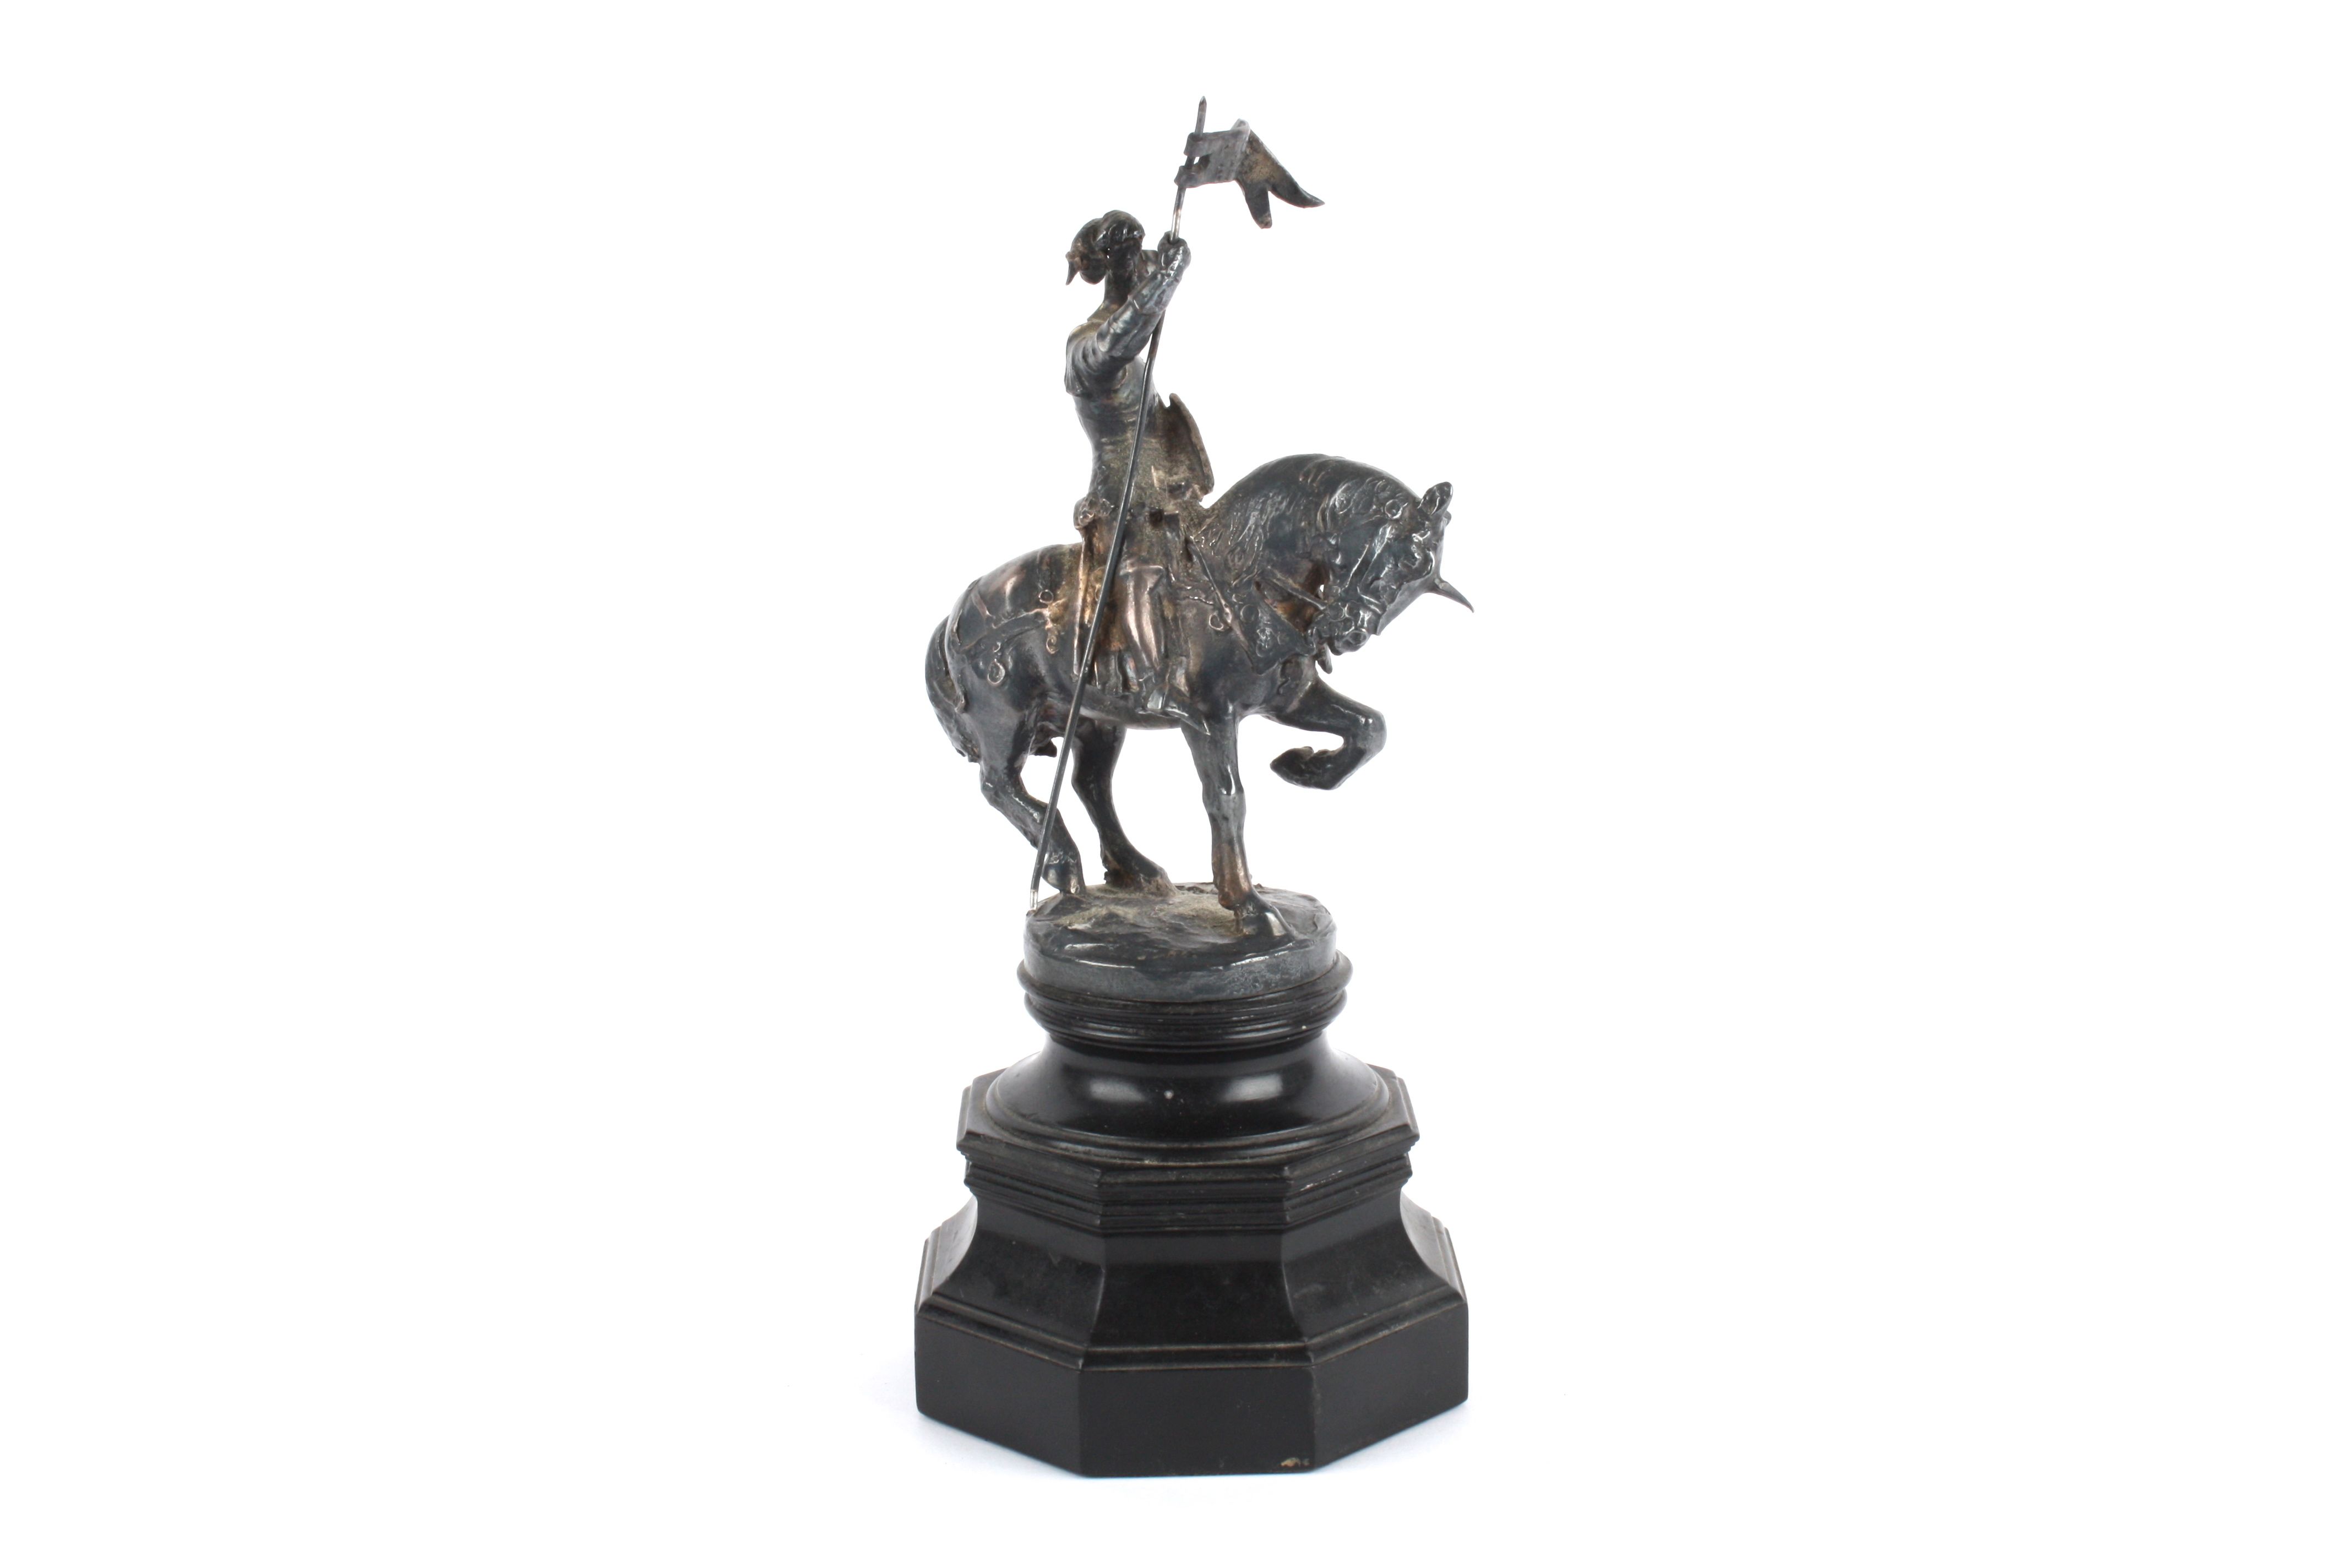 An Edwardian silver Knight on horseback figurine, London 1919 modelled as a knight on horseback - Image 3 of 4